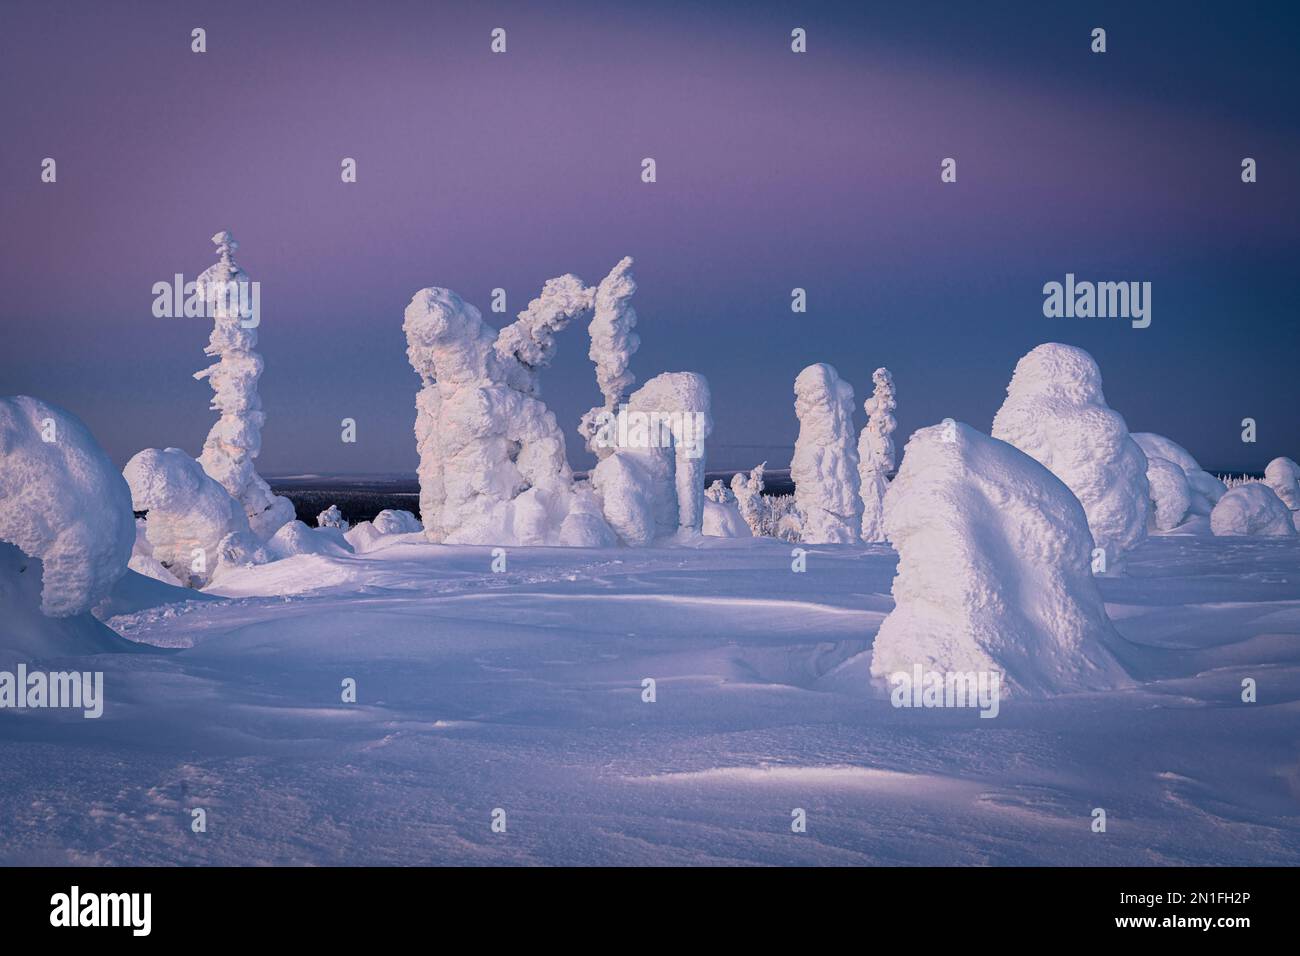 Ice sculptures at dusk, Riisitunturi National Park, Posio, Lapland, Finland, Europe Stock Photo